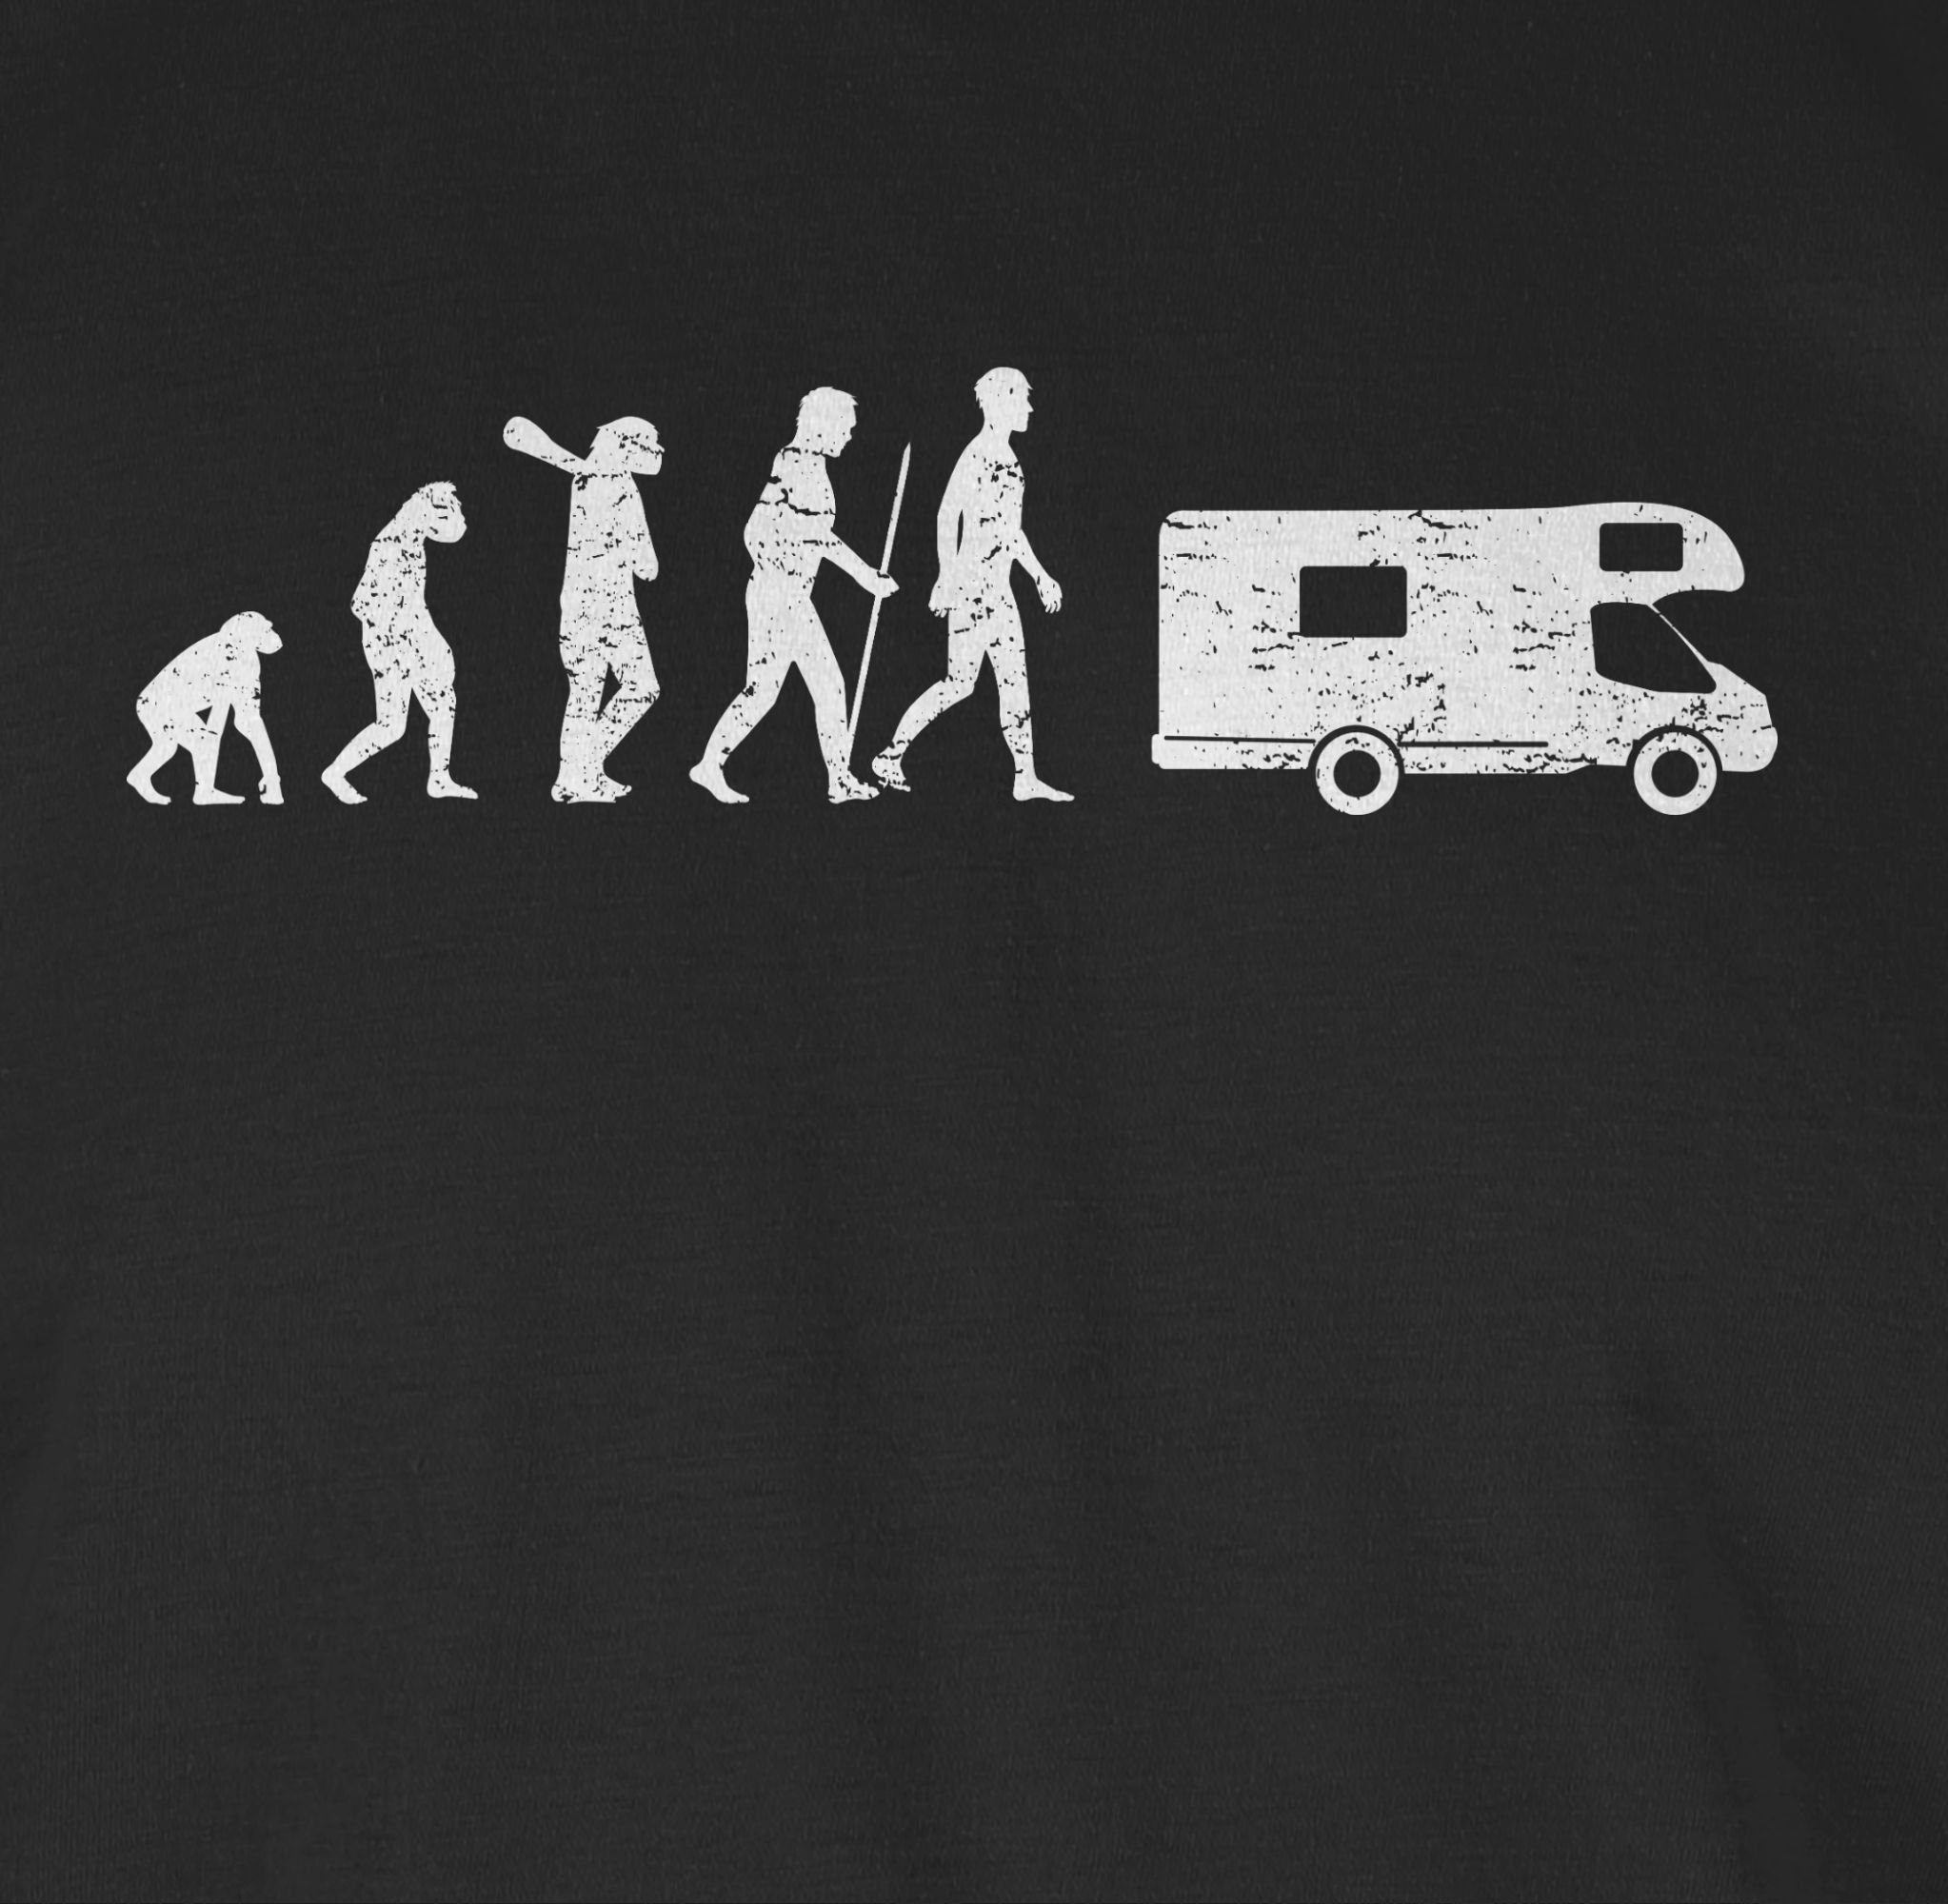 Shirtracer T-Shirt Camper Outfit weiß 1 Evolution Evolution Schwarz